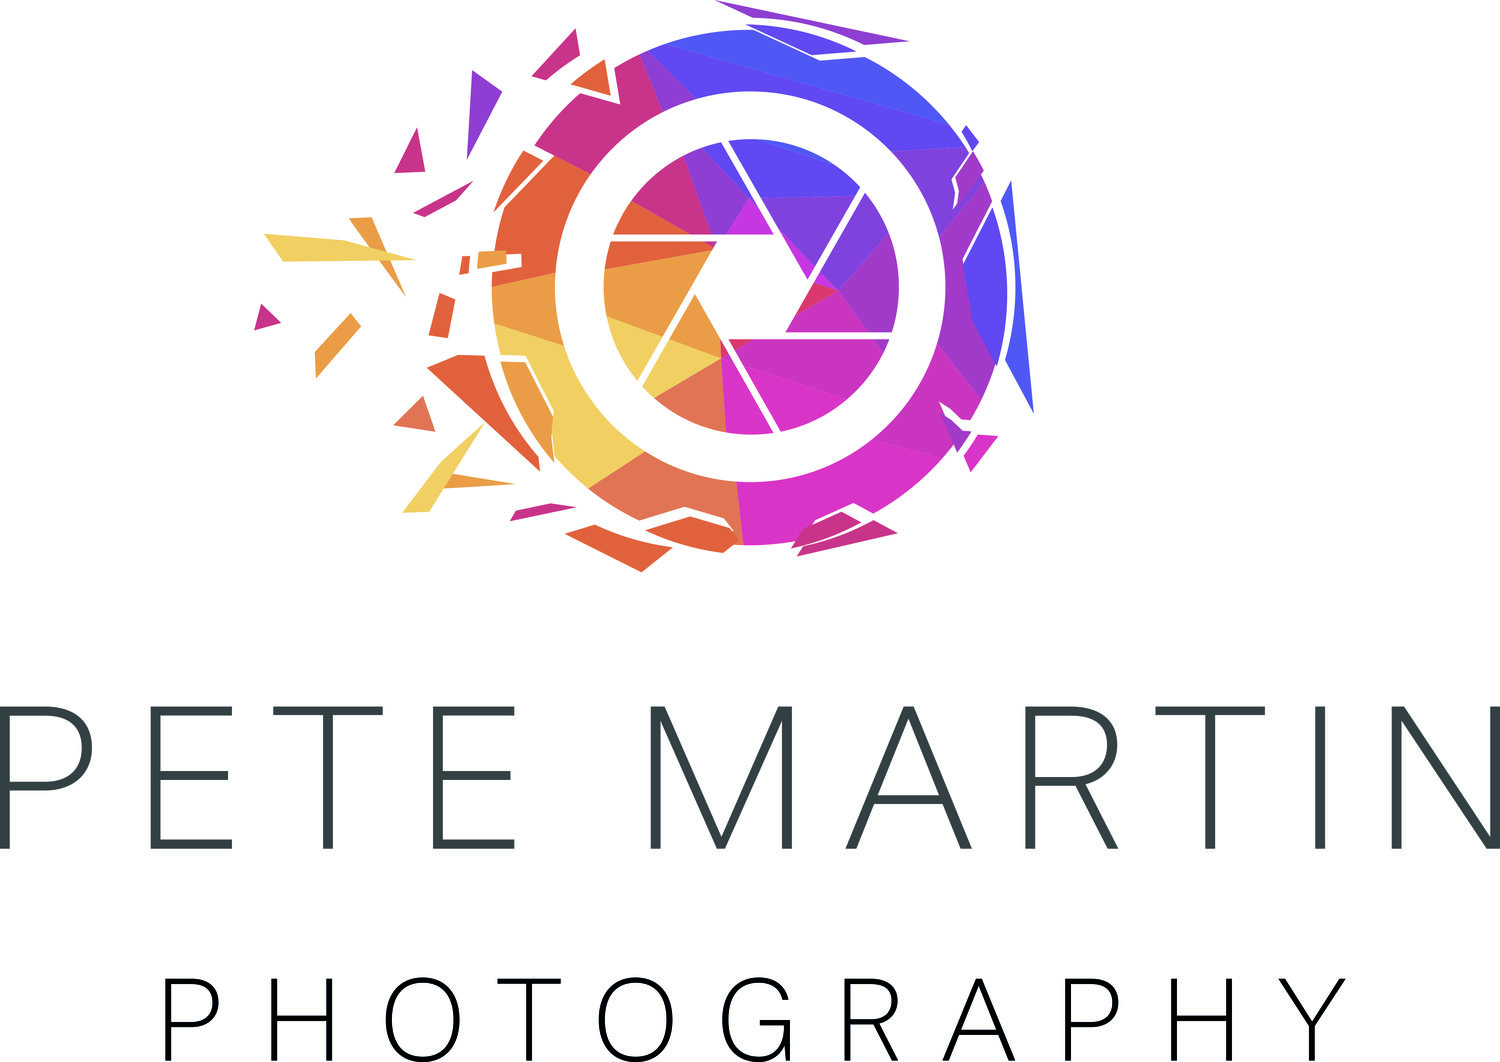 Pete Martin Photography